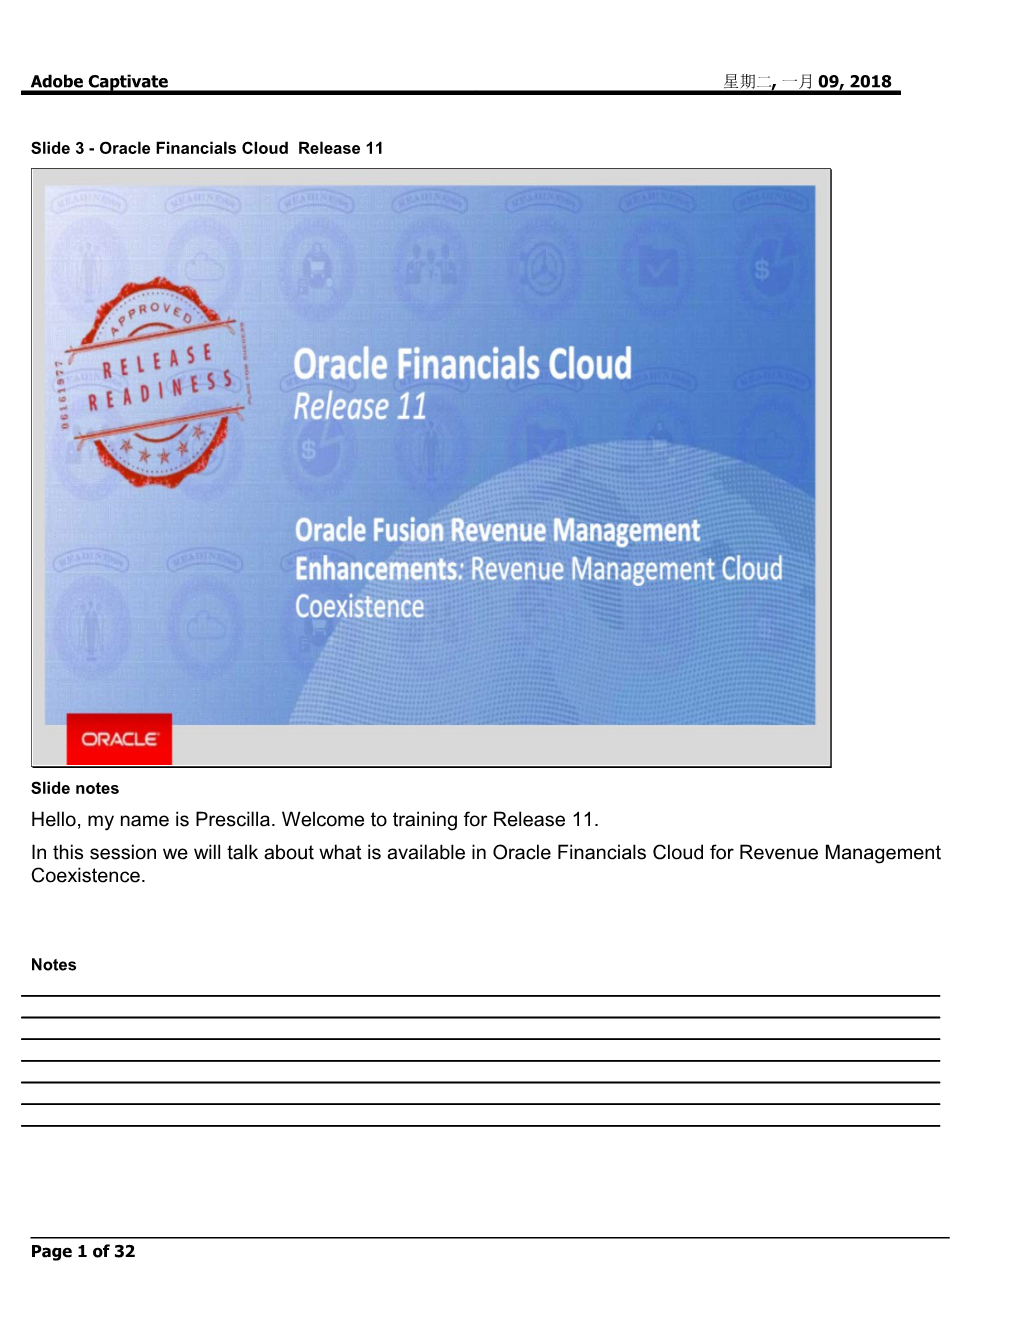 Slide 3 - Oracle Financials Cloud Release 11